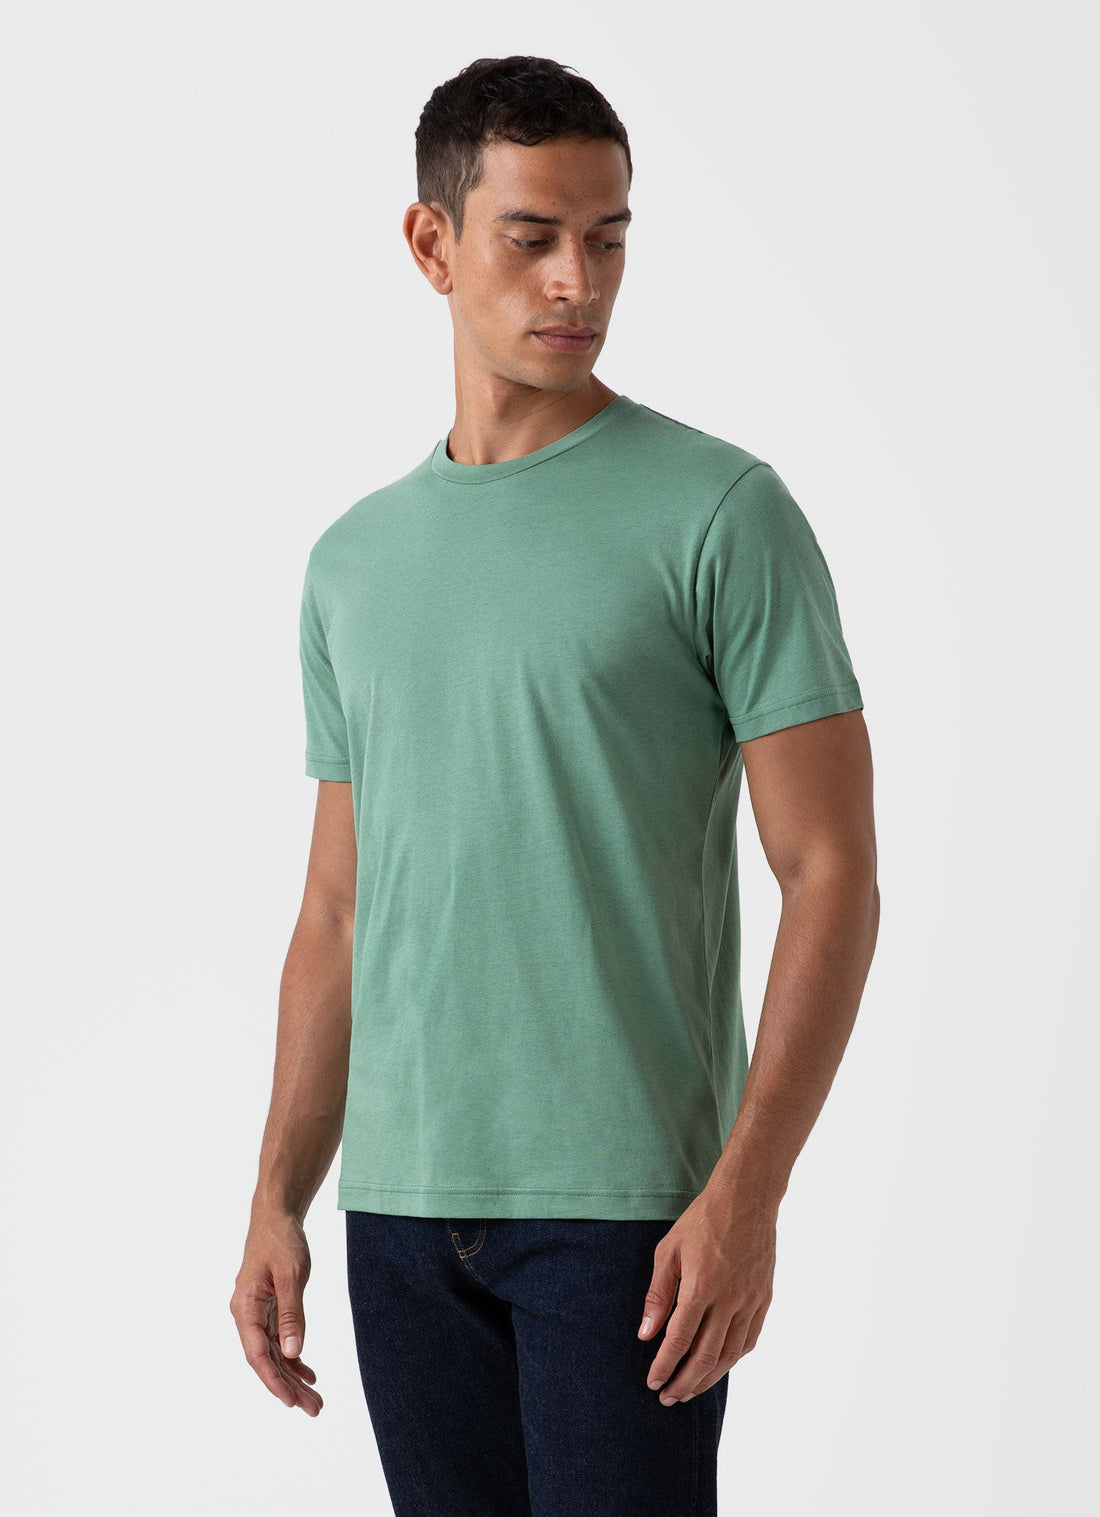 Men's Riviera T-shirt in Thyme Melange